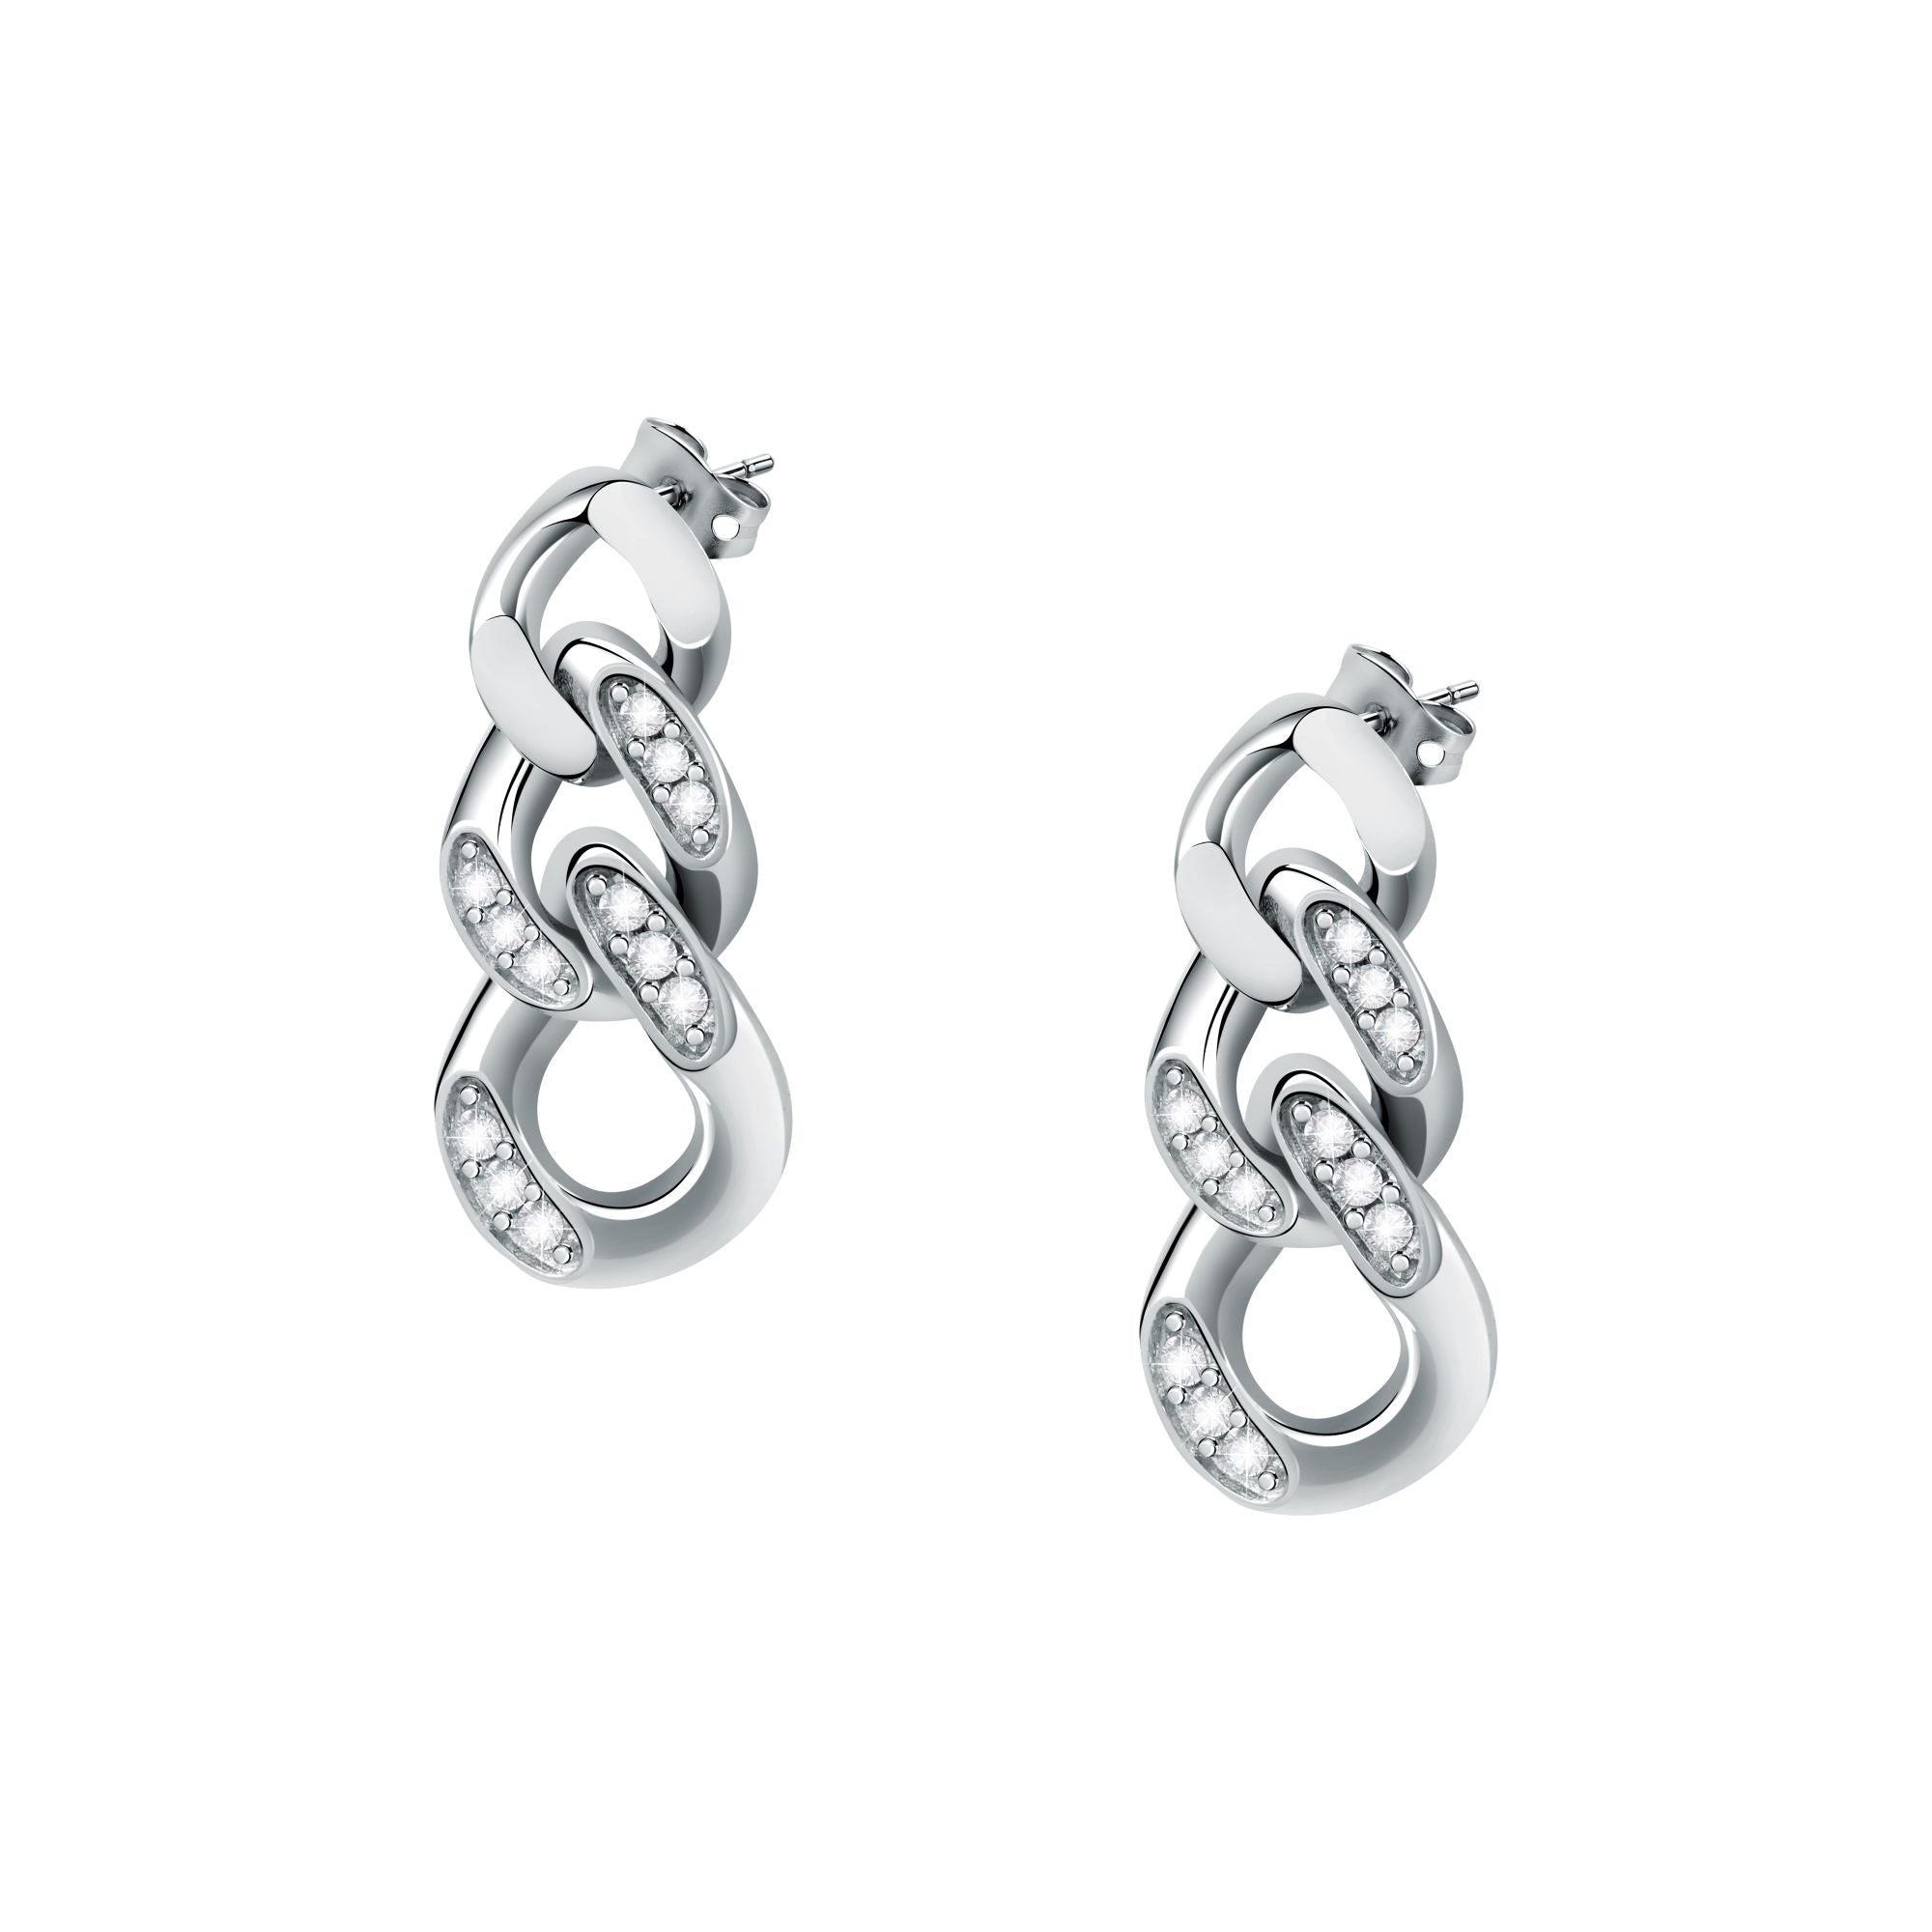 Chiara Ferragni Chain Collection Silver Earrings-Earrings-PEROZ Accessories